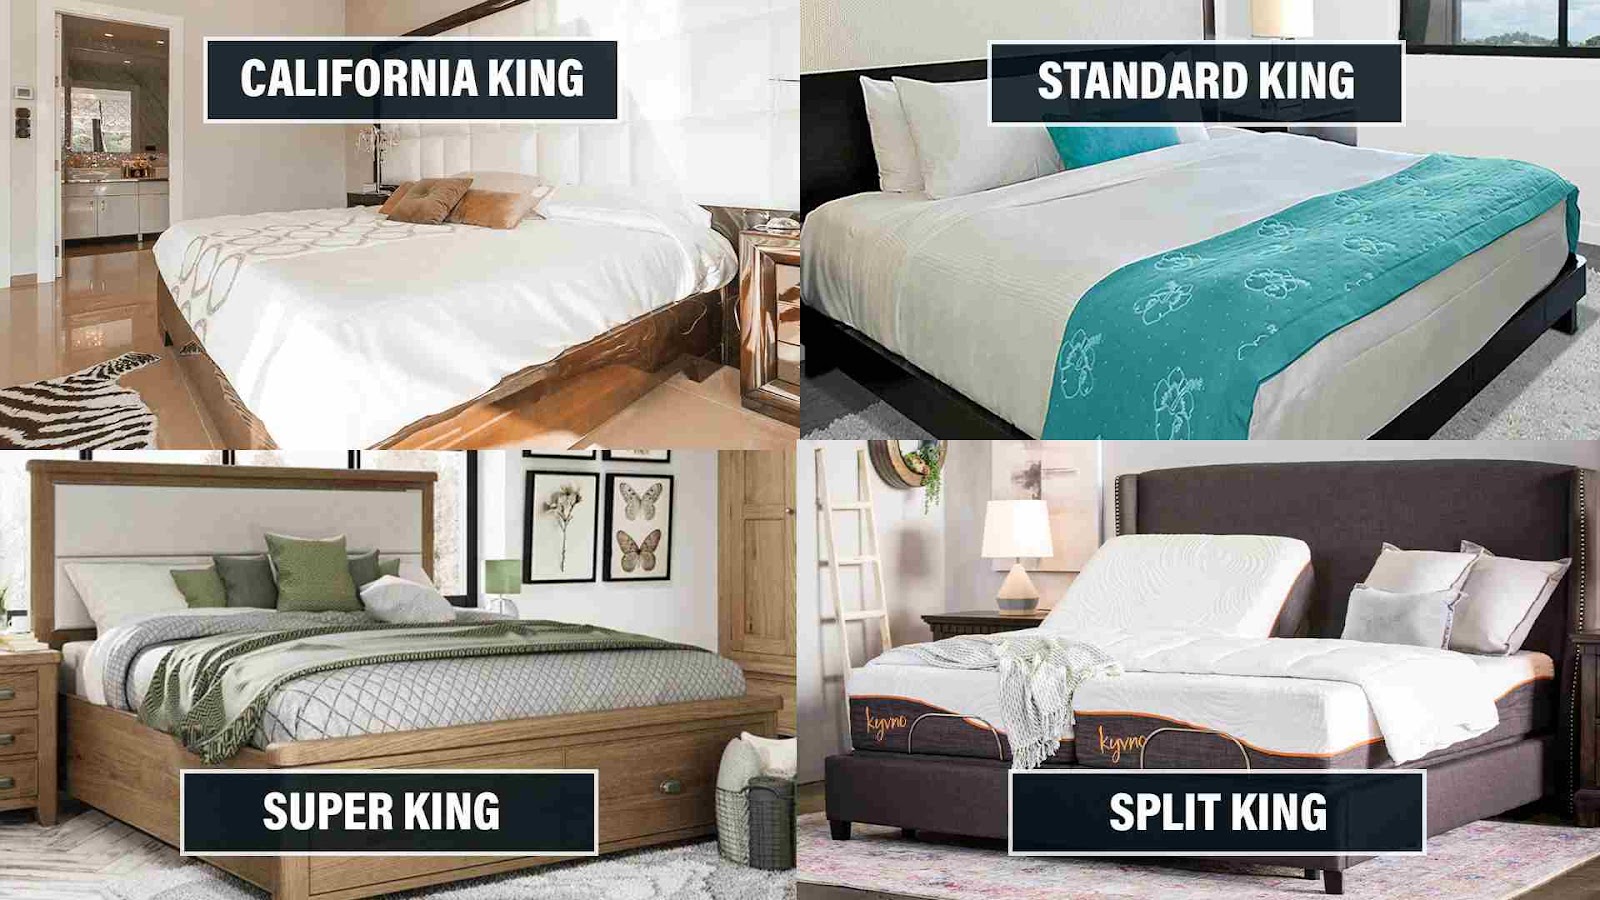 California king mattresses